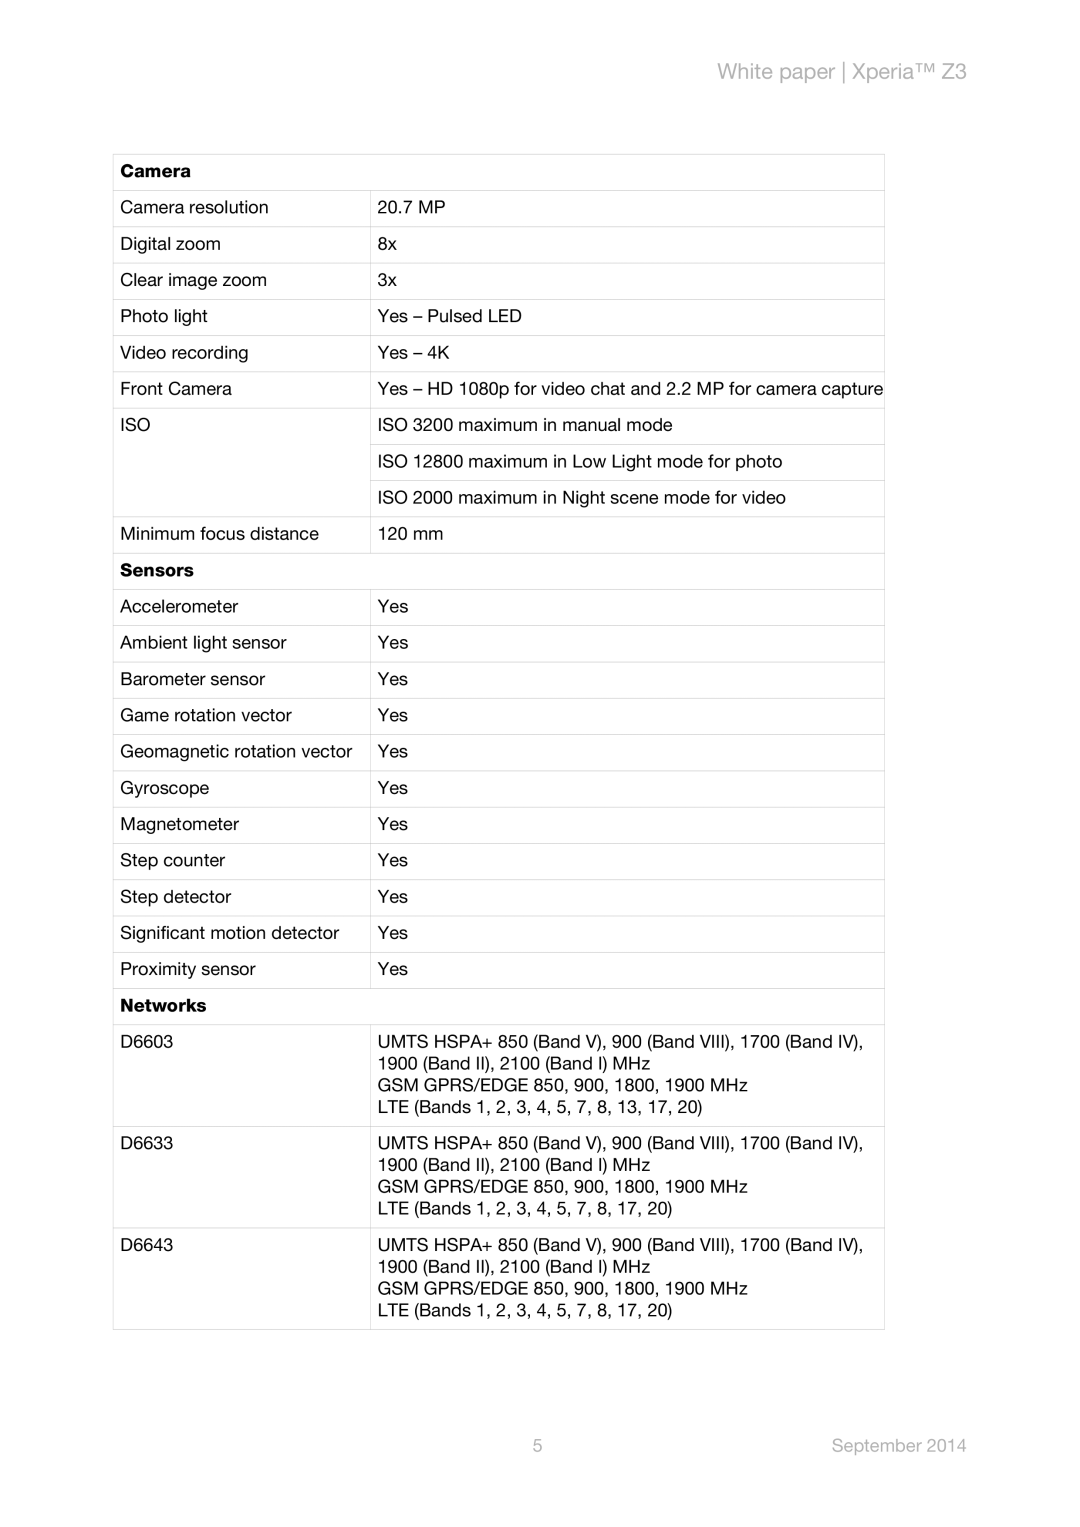 Sony D6616, D6653, D6633, D6603, D6643 manual White paper Xperia Z3, September 